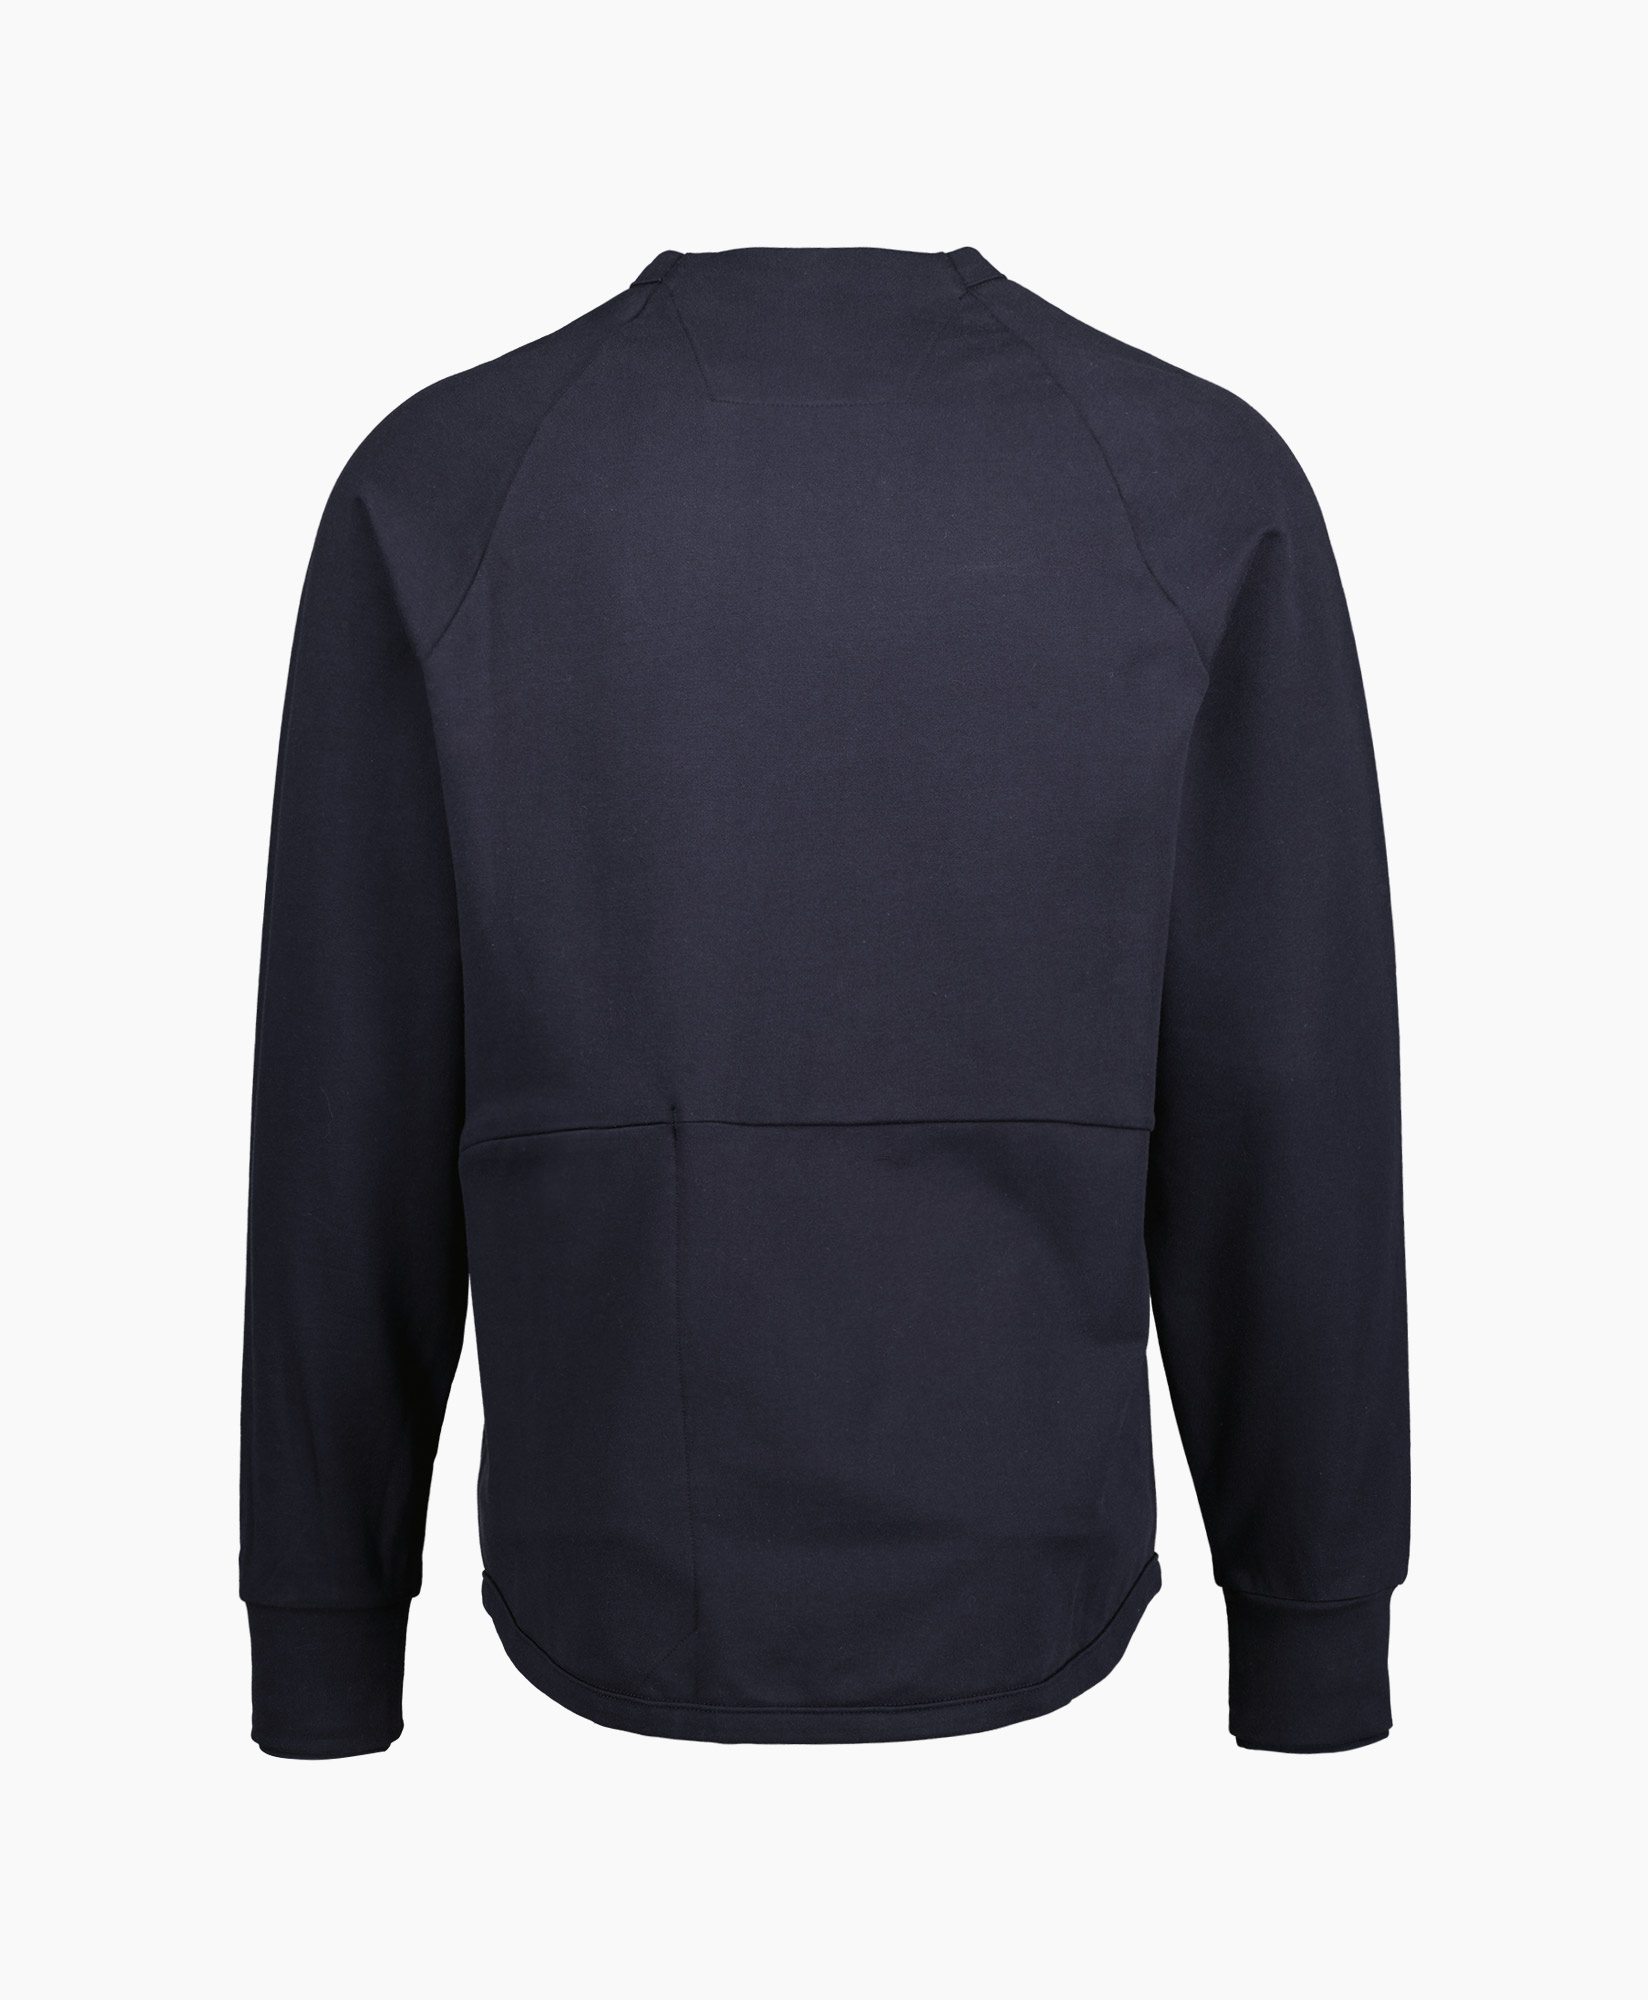 Cp Company Sweater 14cmss049a-006452 Zwart